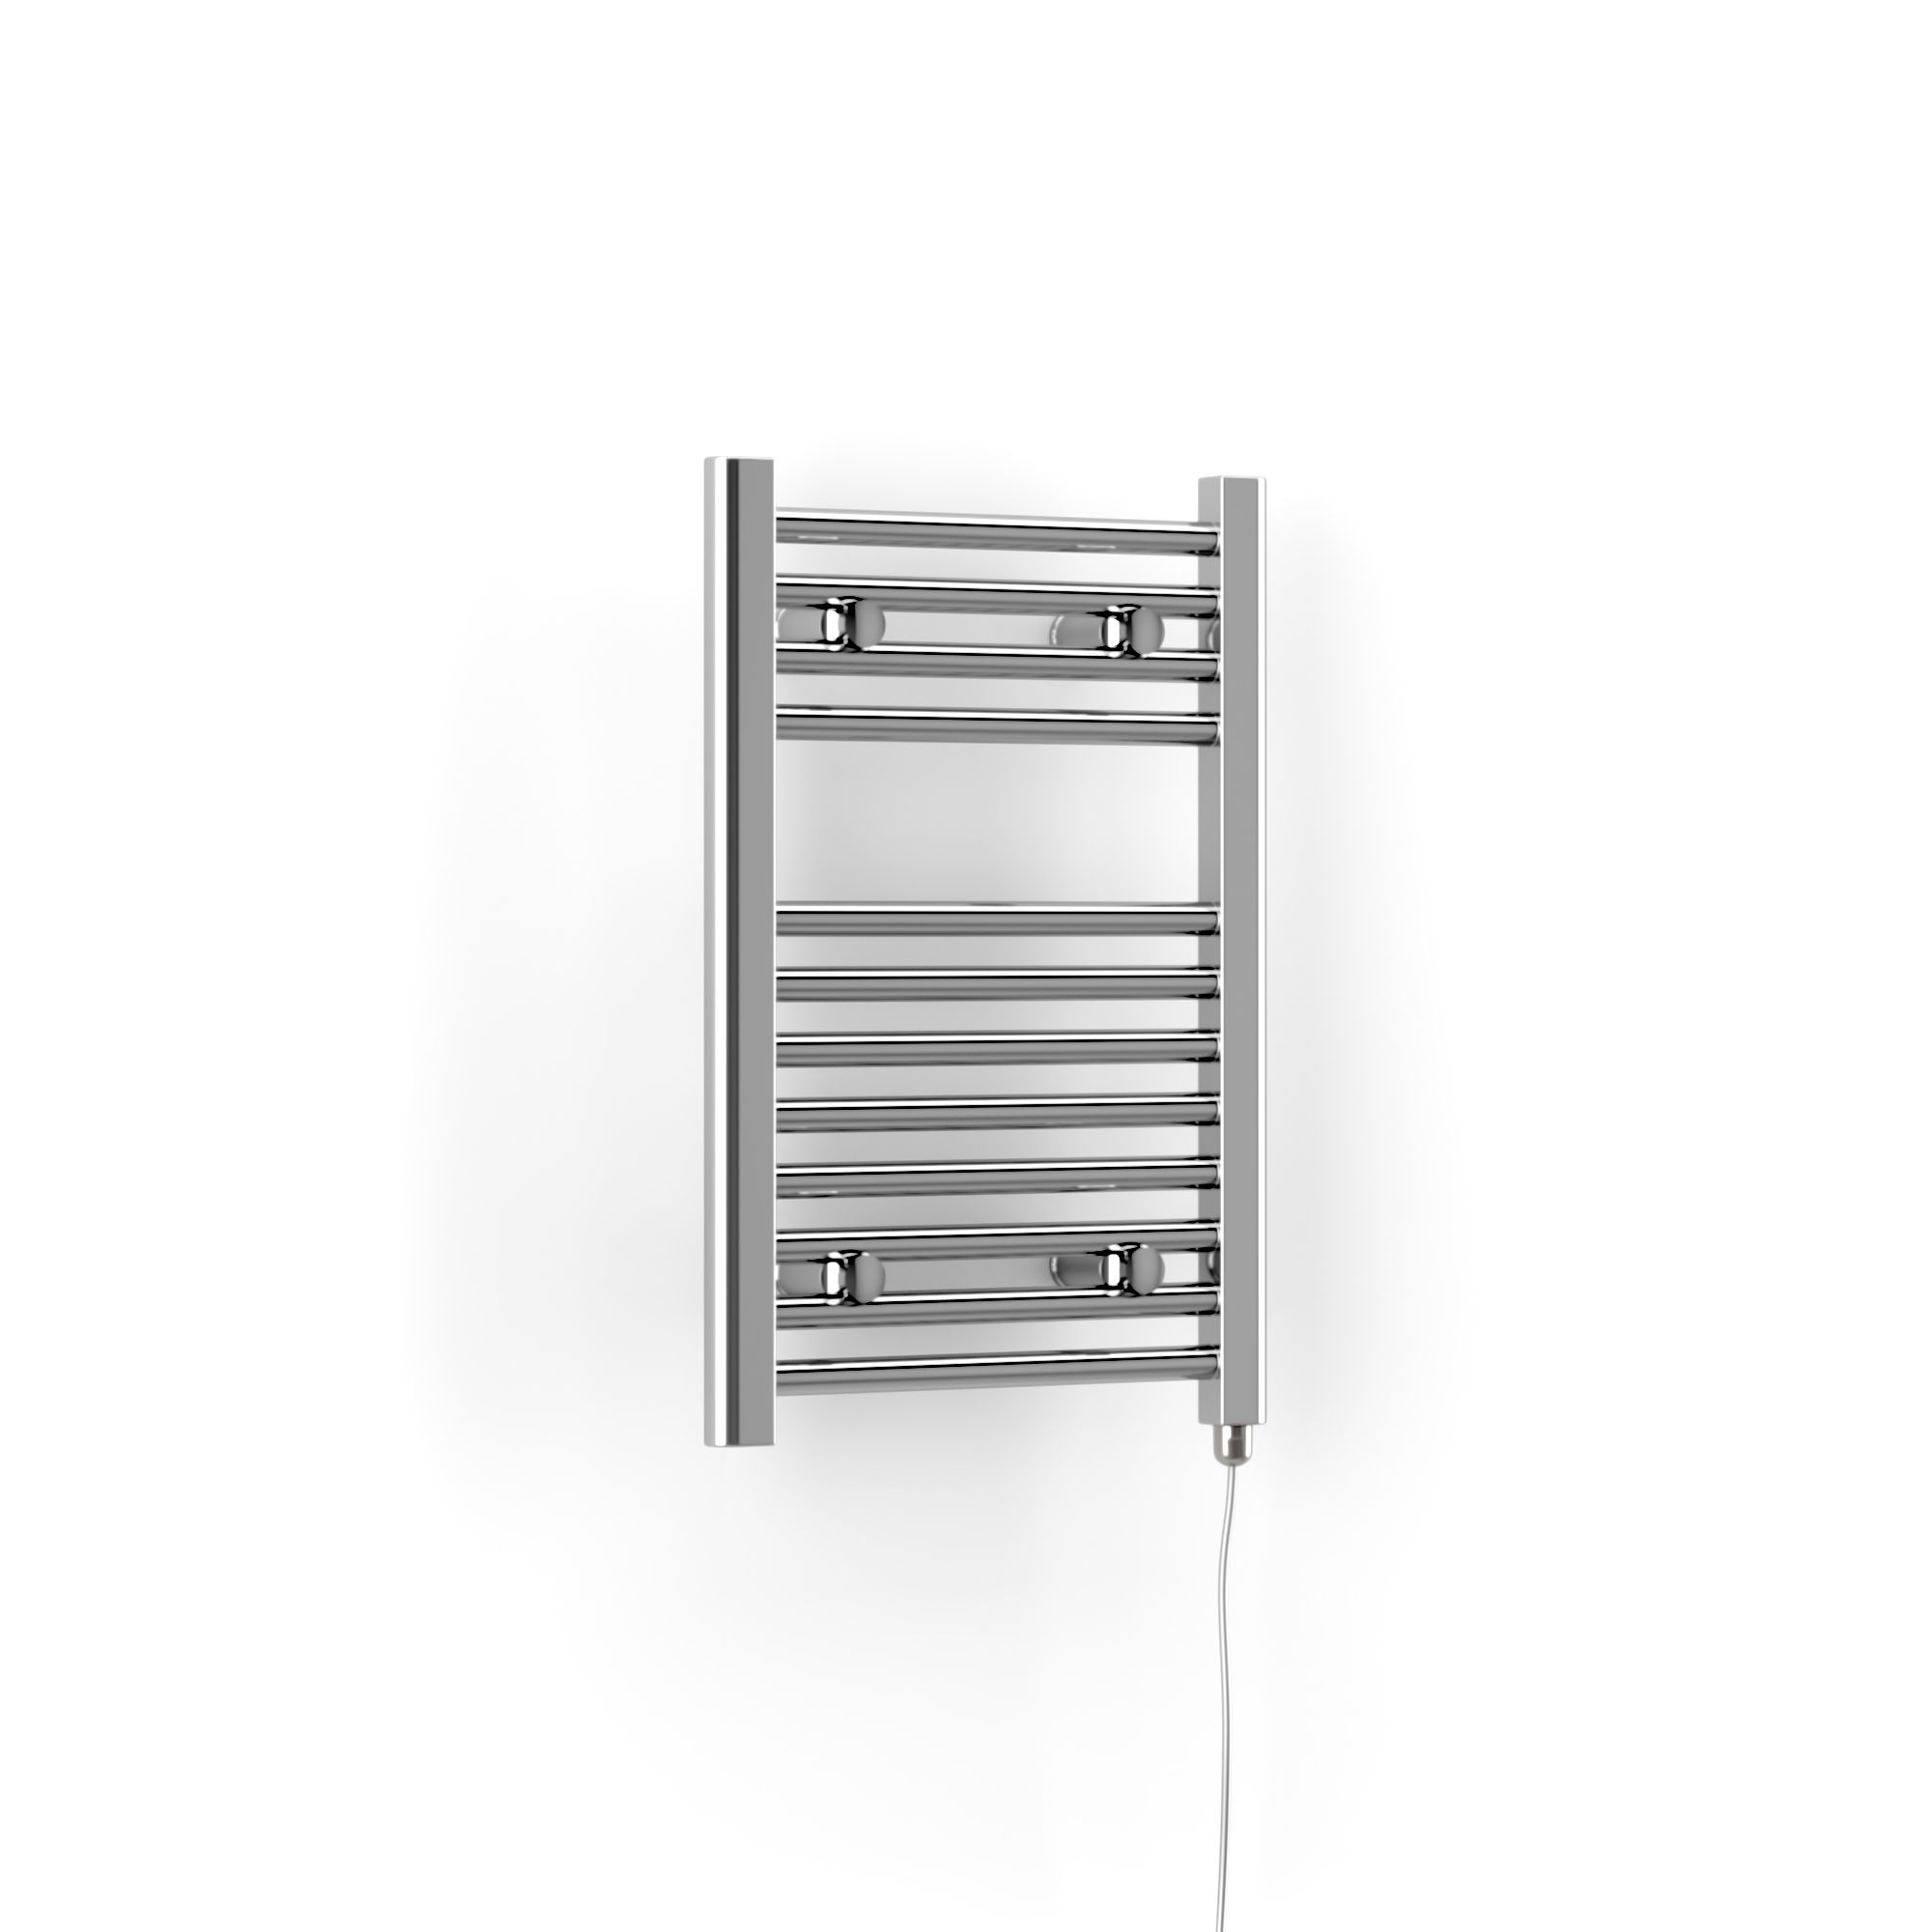 Terma Leo Chrome effect Electric Towel warmer (W)400mm x (H)600mm